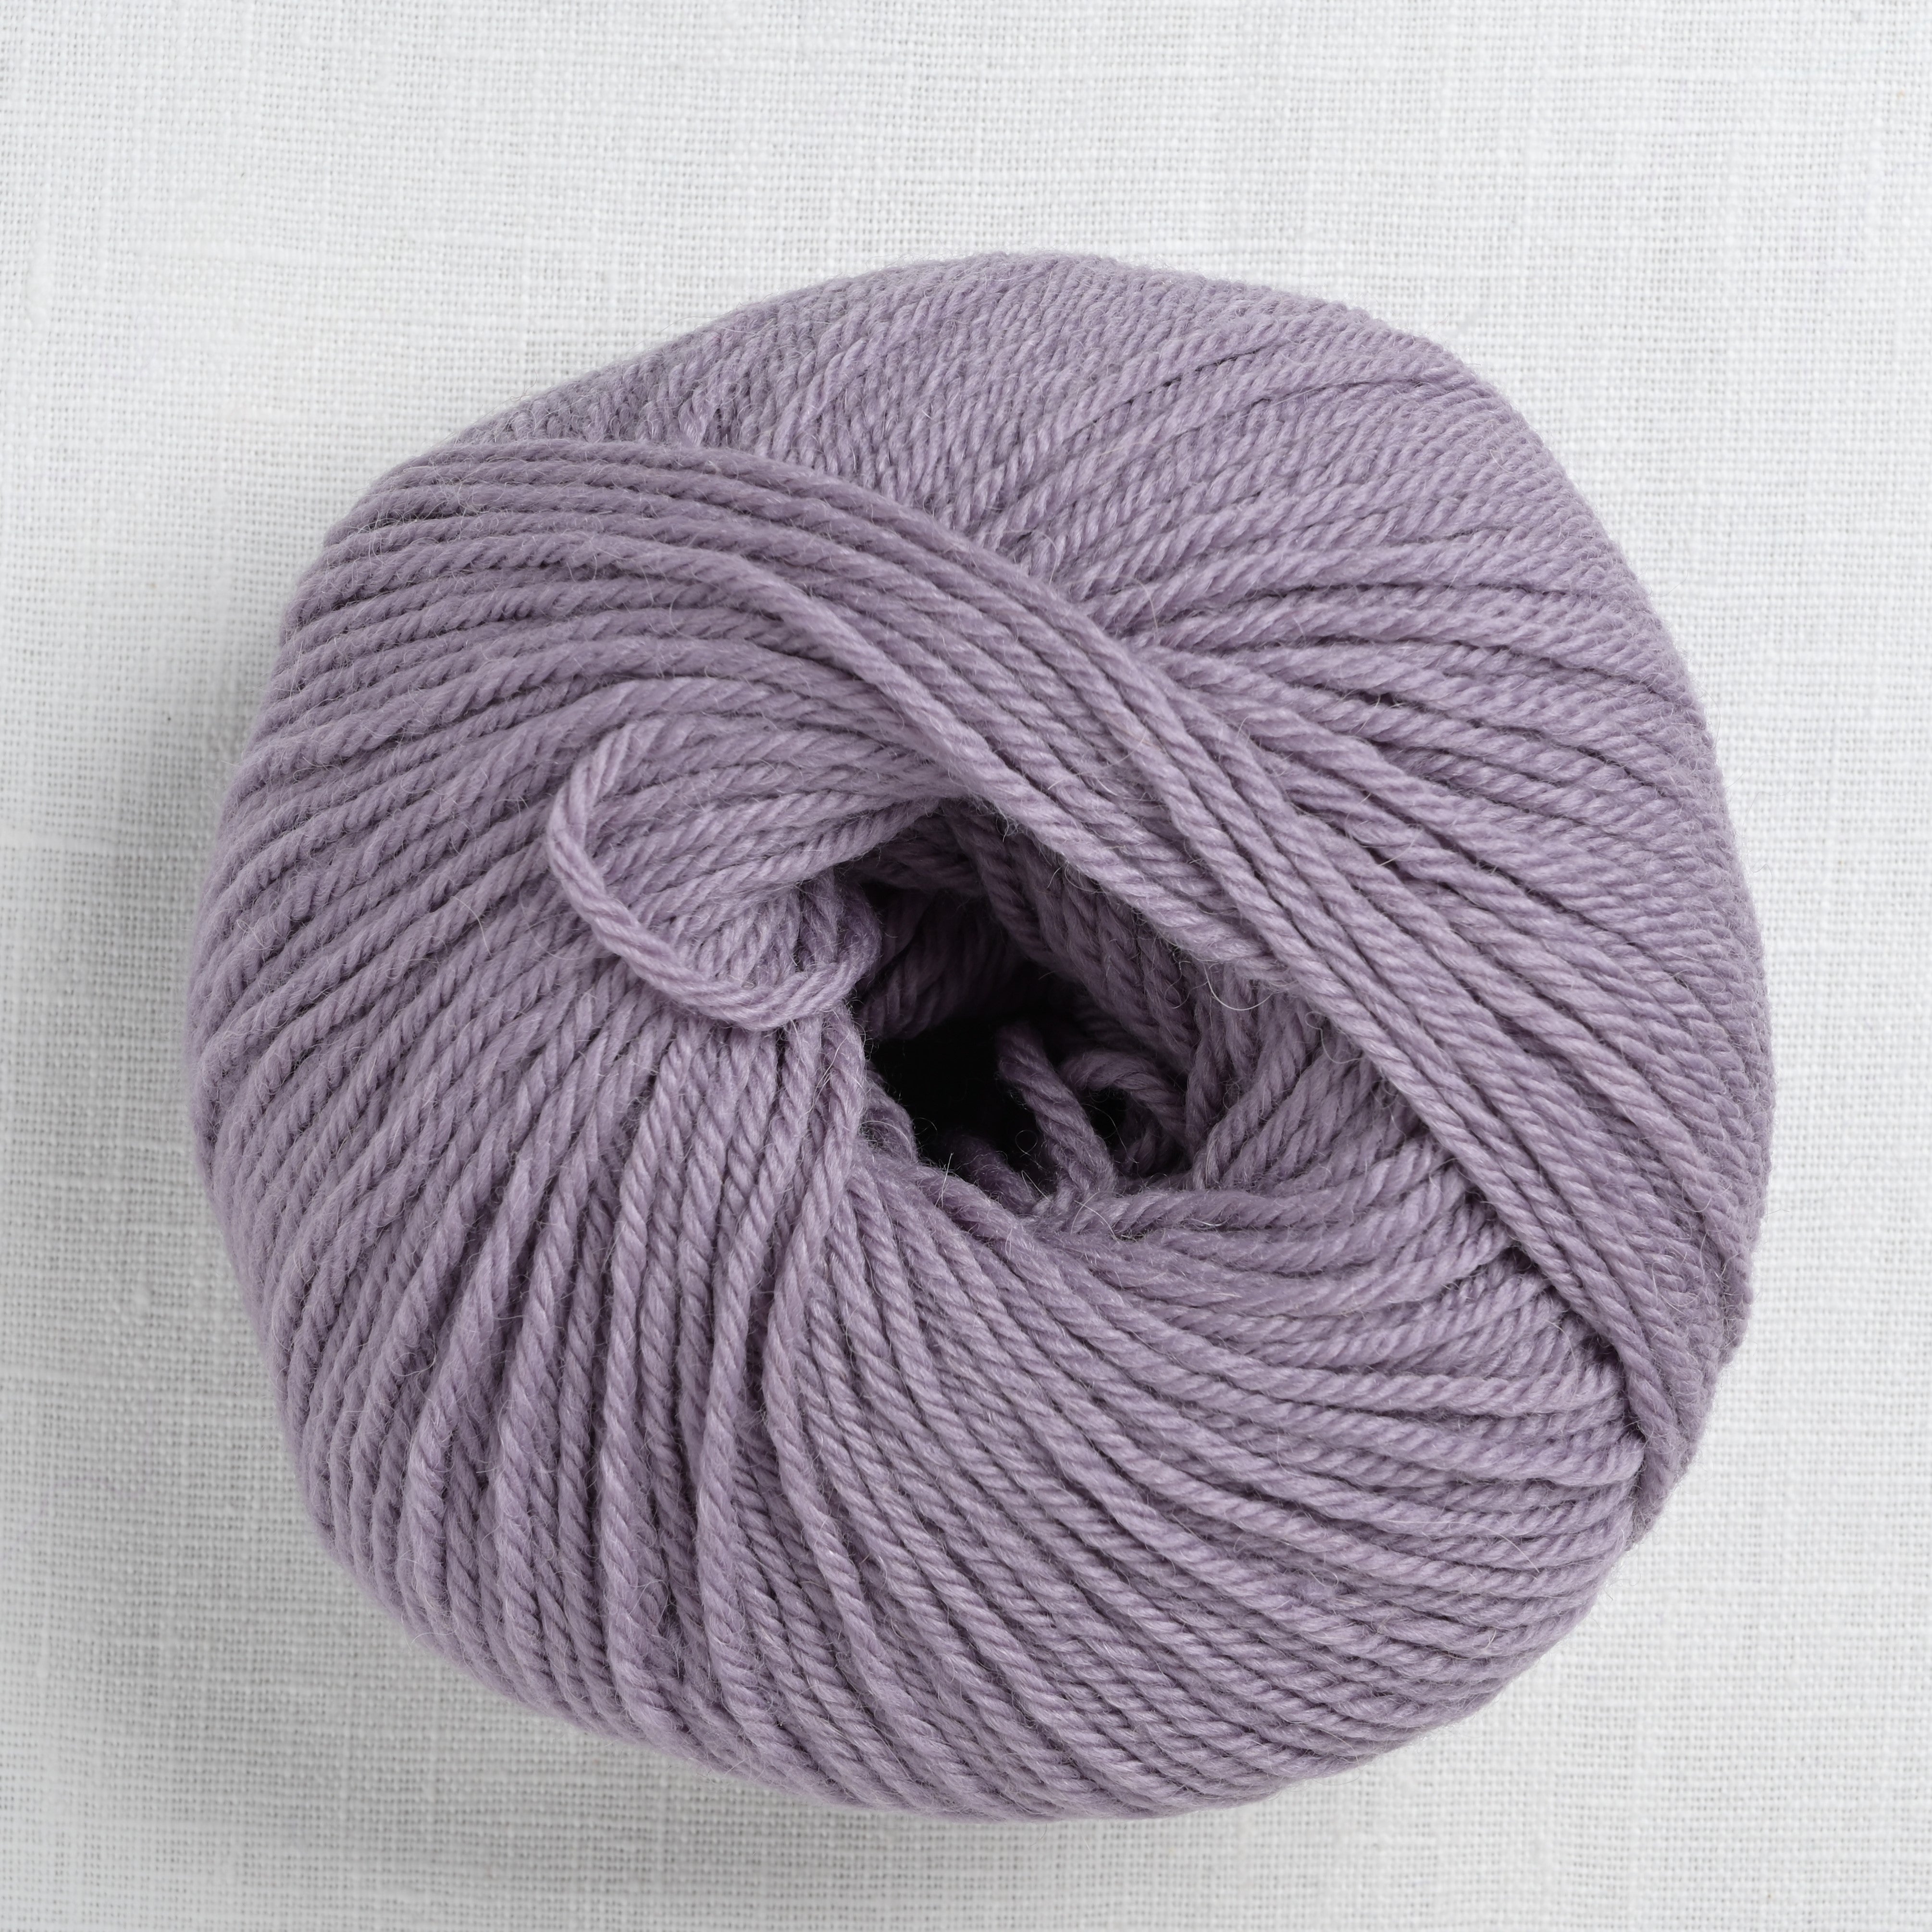 Roving Yarn – CraftedbyCatherine